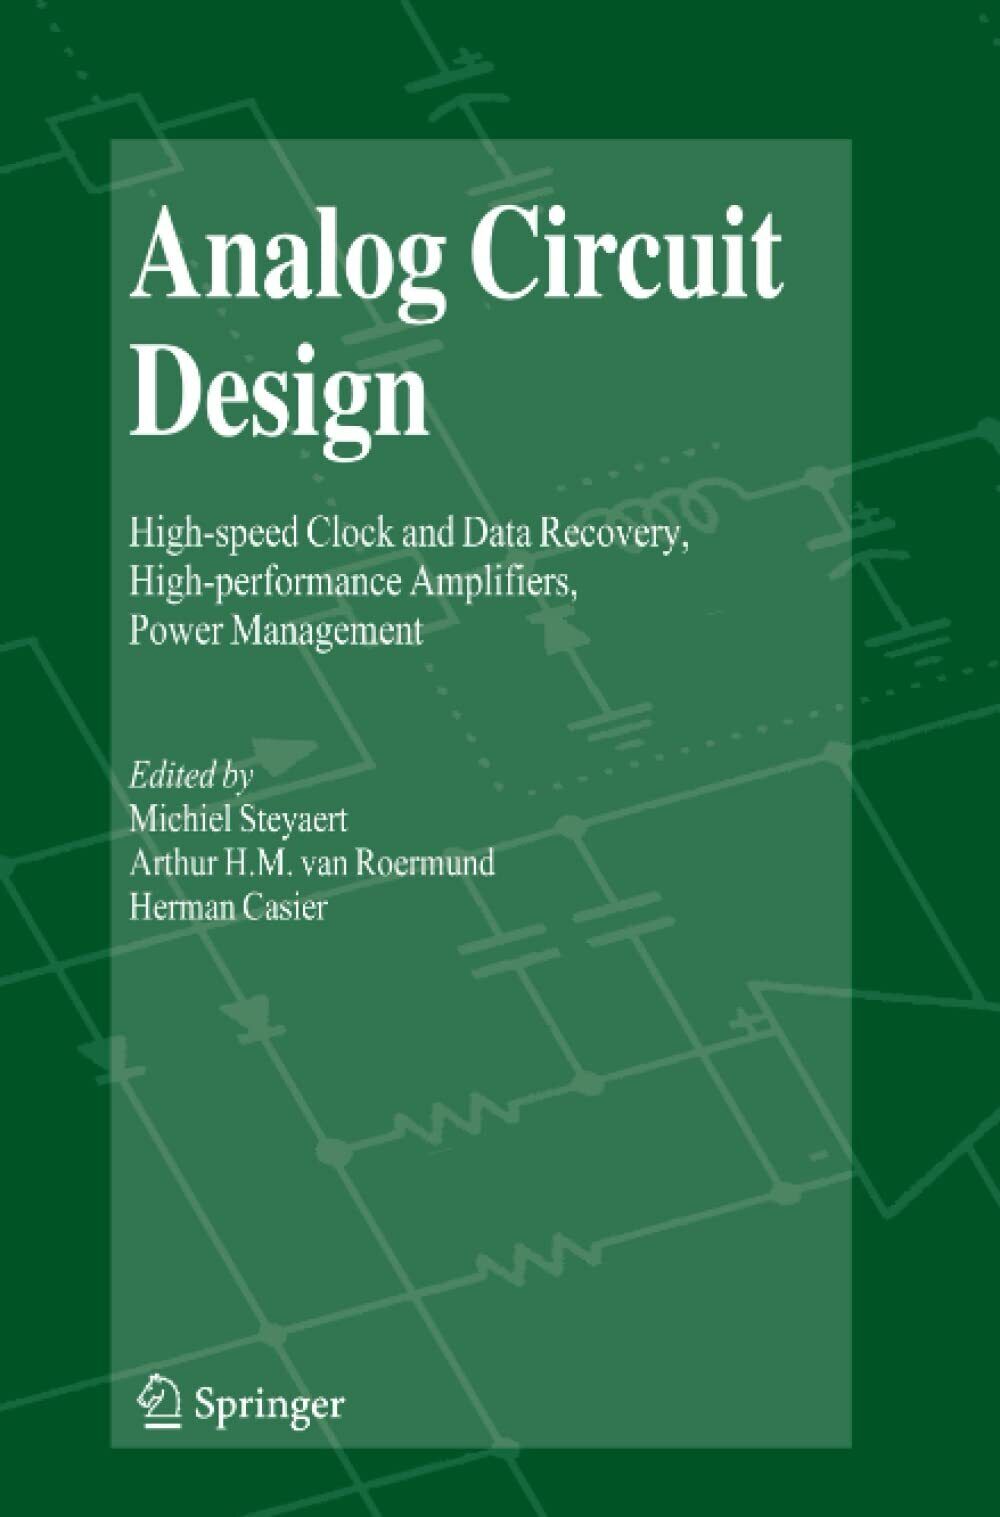 Analog Circuit Design - Michiel Steyaert - Springer, 2010